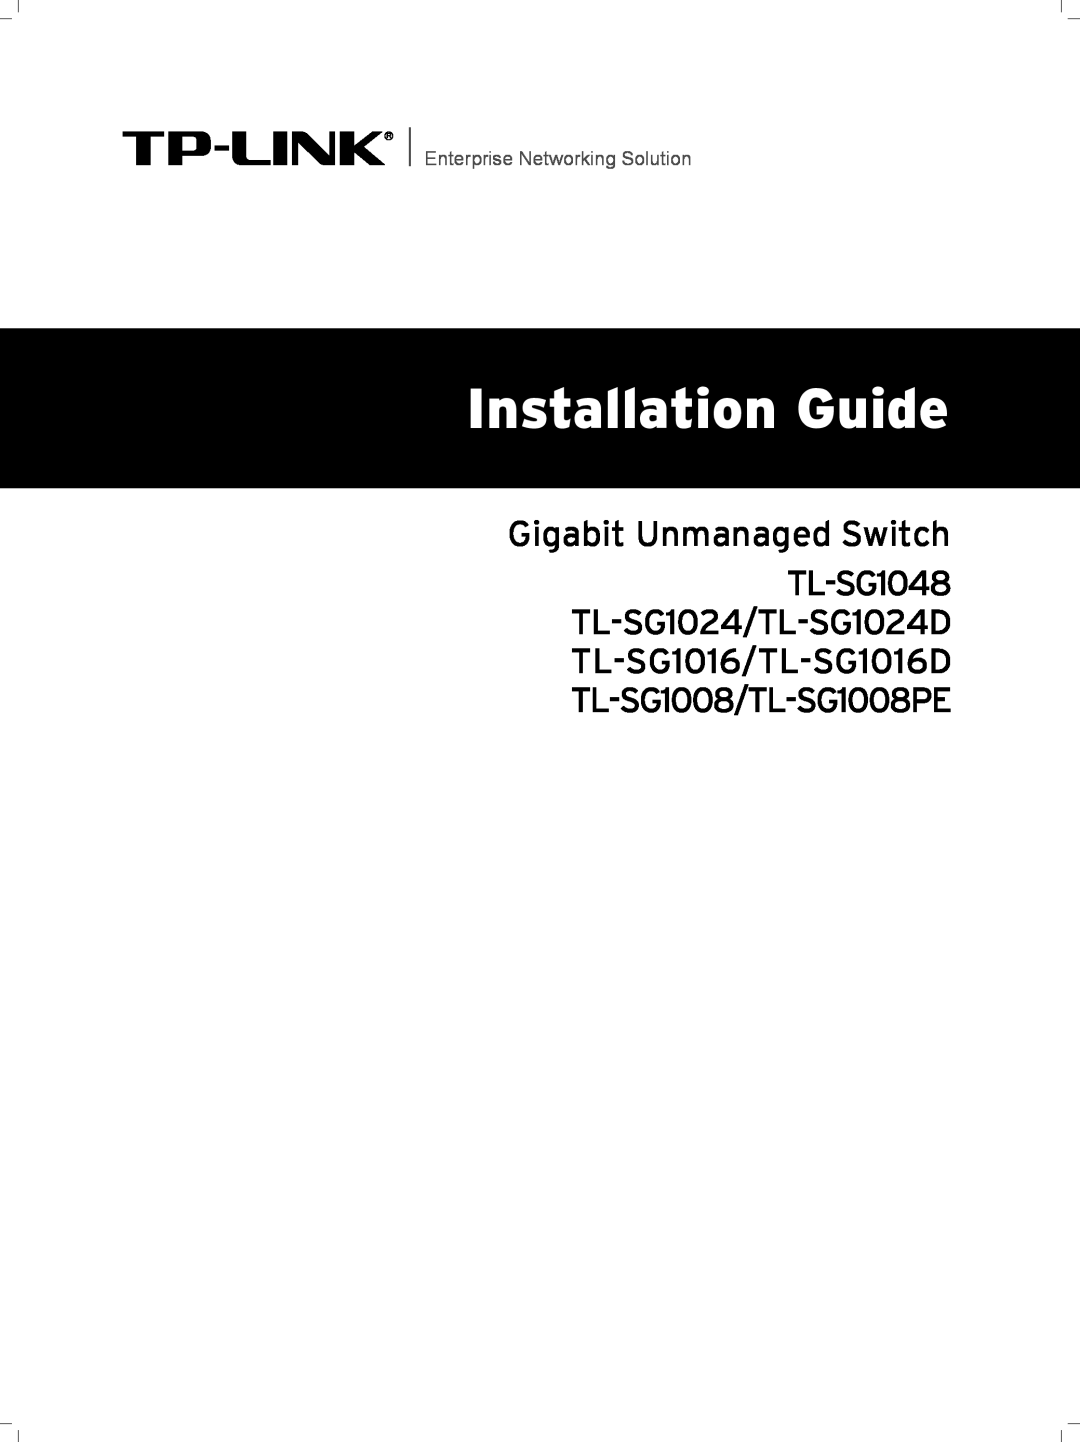 TP-Link tl-sg1048 manual Installation Guide, Gigabit Unmanaged Switch TL-SG1048 TL-SG1024/TL-SG1024D 